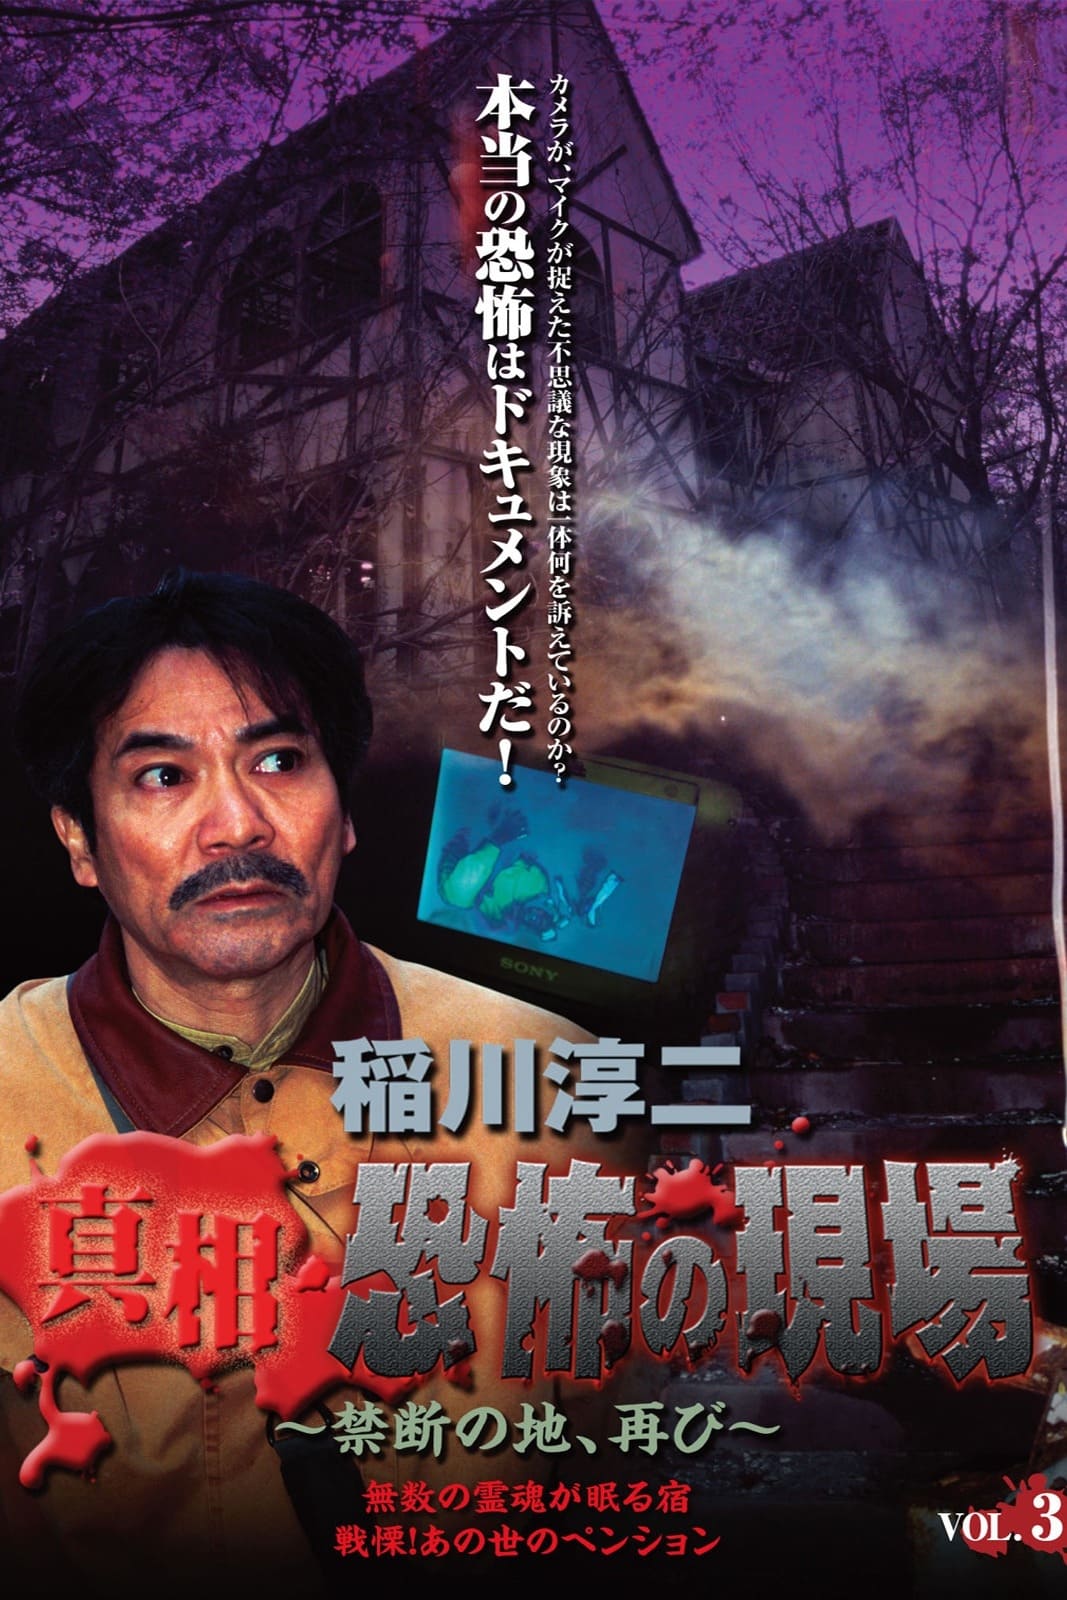 Junji Inagawa - Revealing the Truth: Terrifying Sites - Forbidden Land, Once Again VOL.3